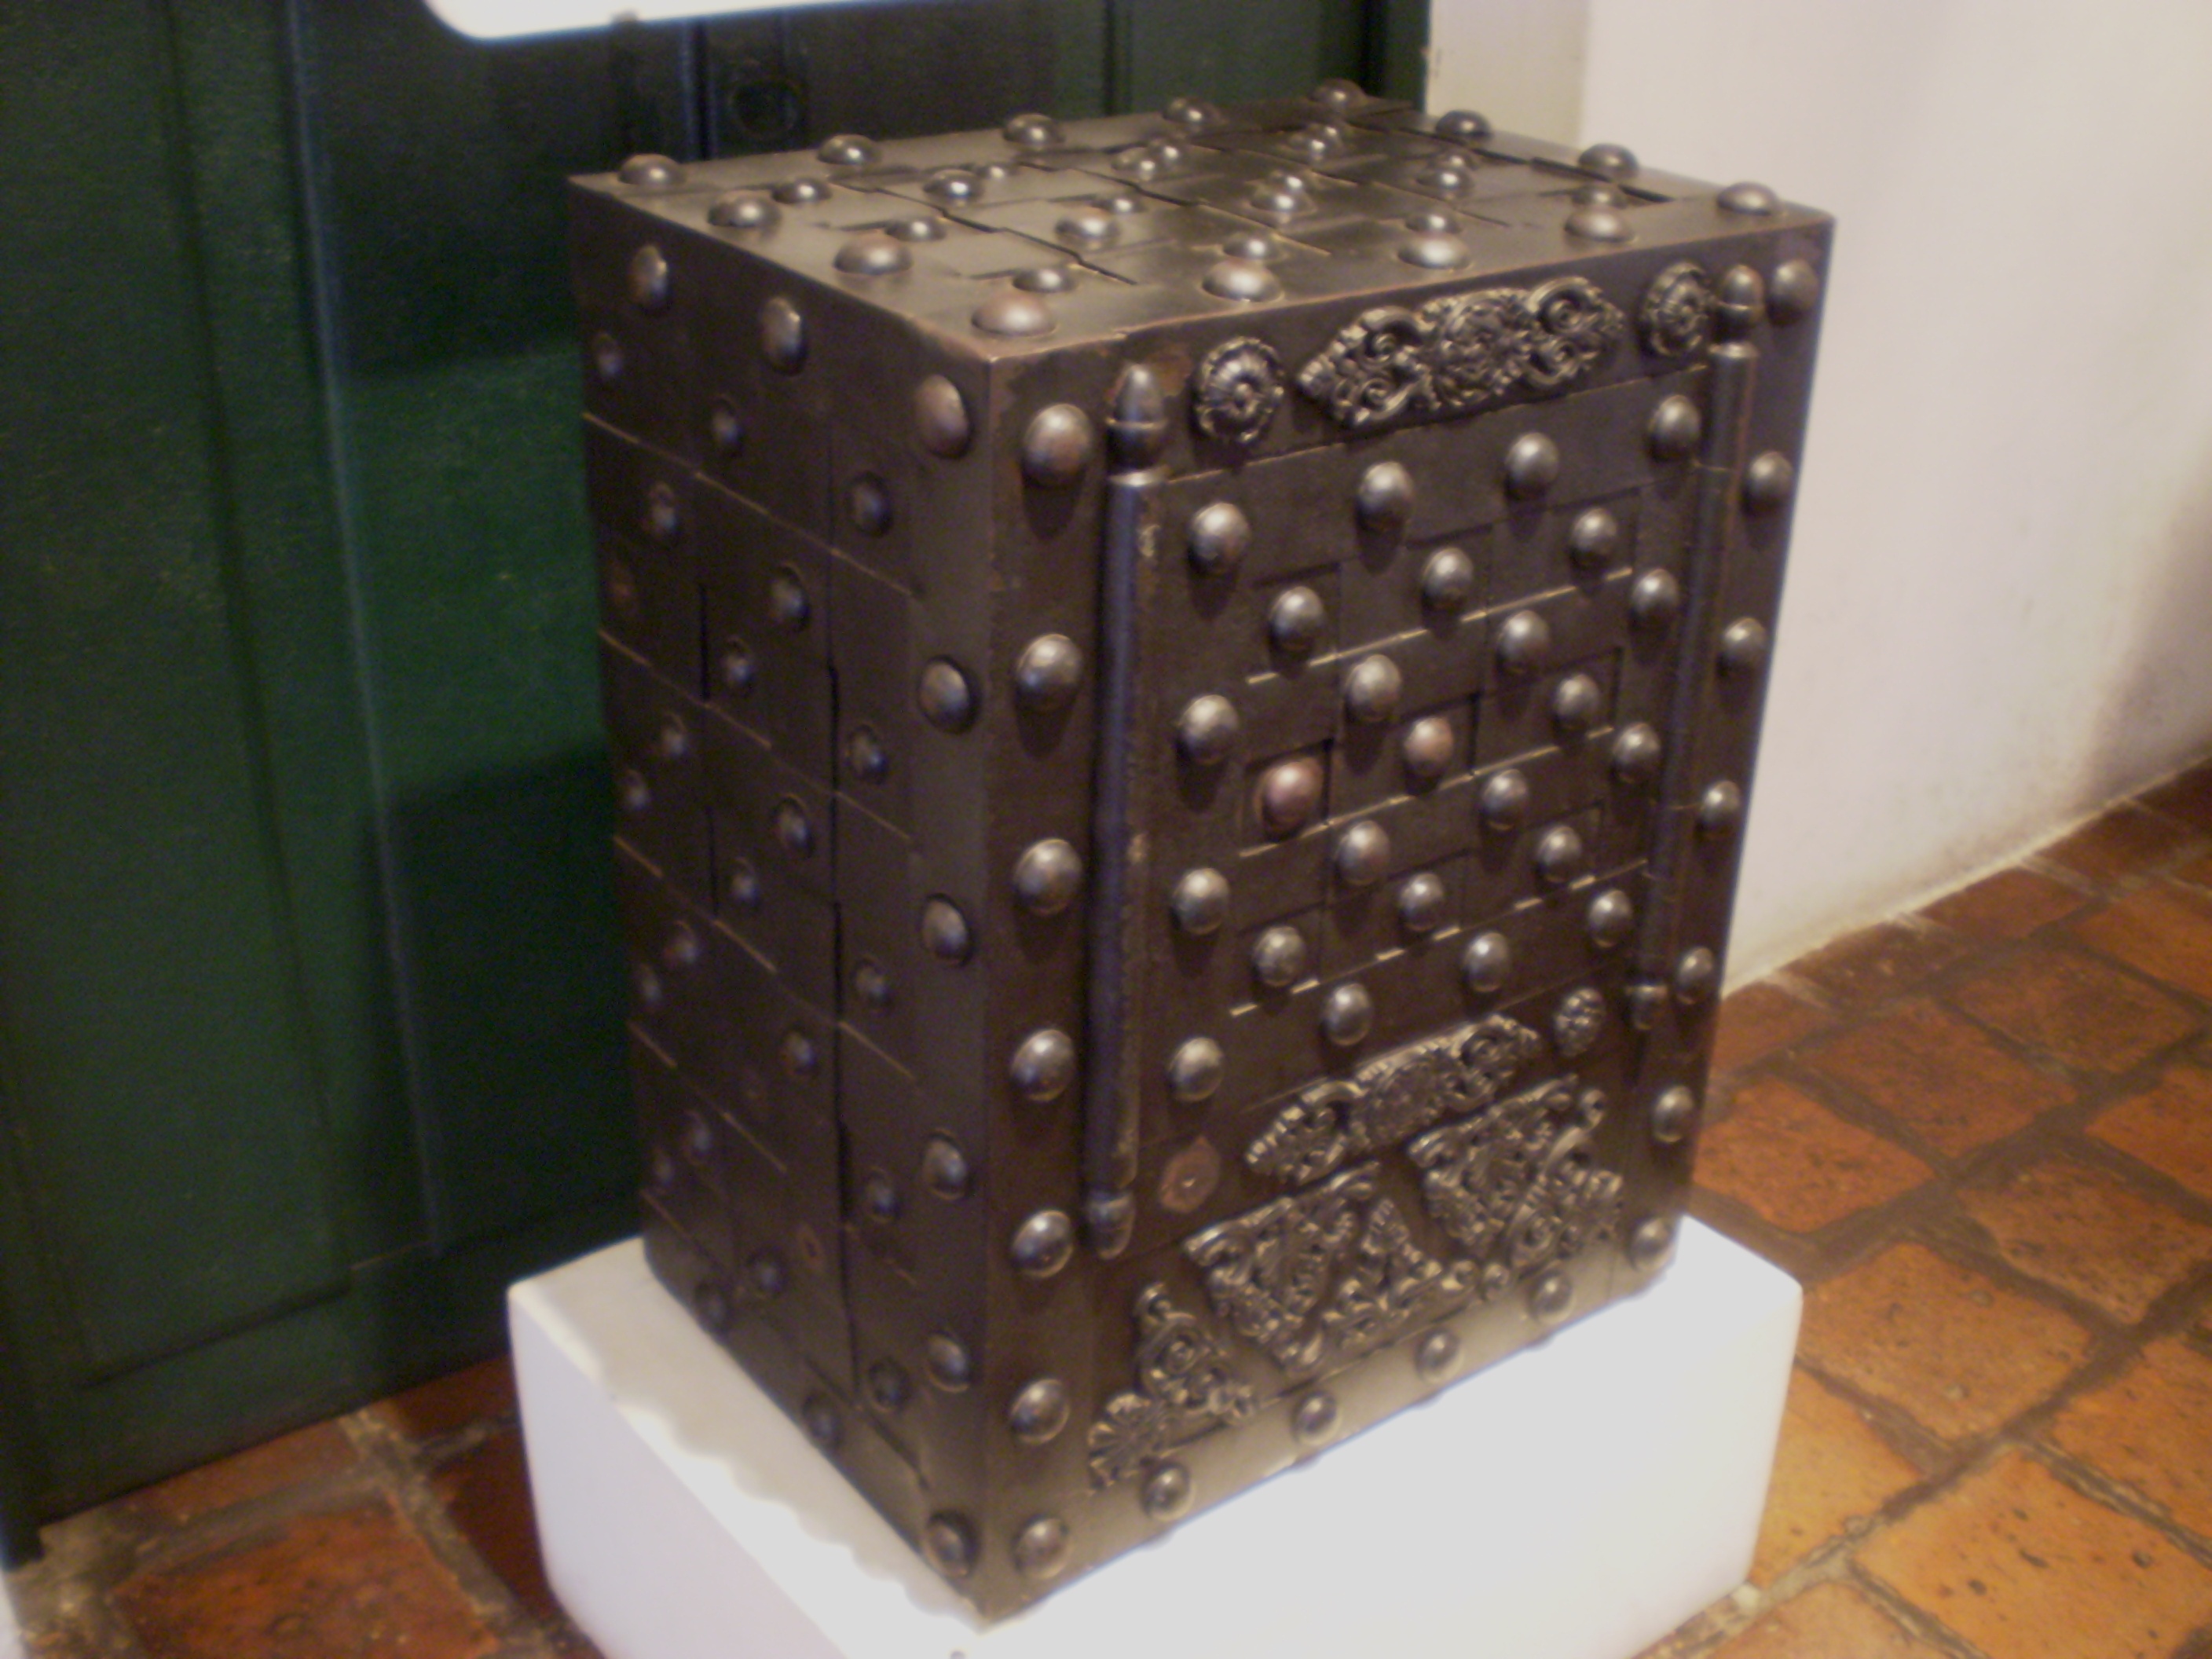 Caja caudales antigua Pibernat Barcelona